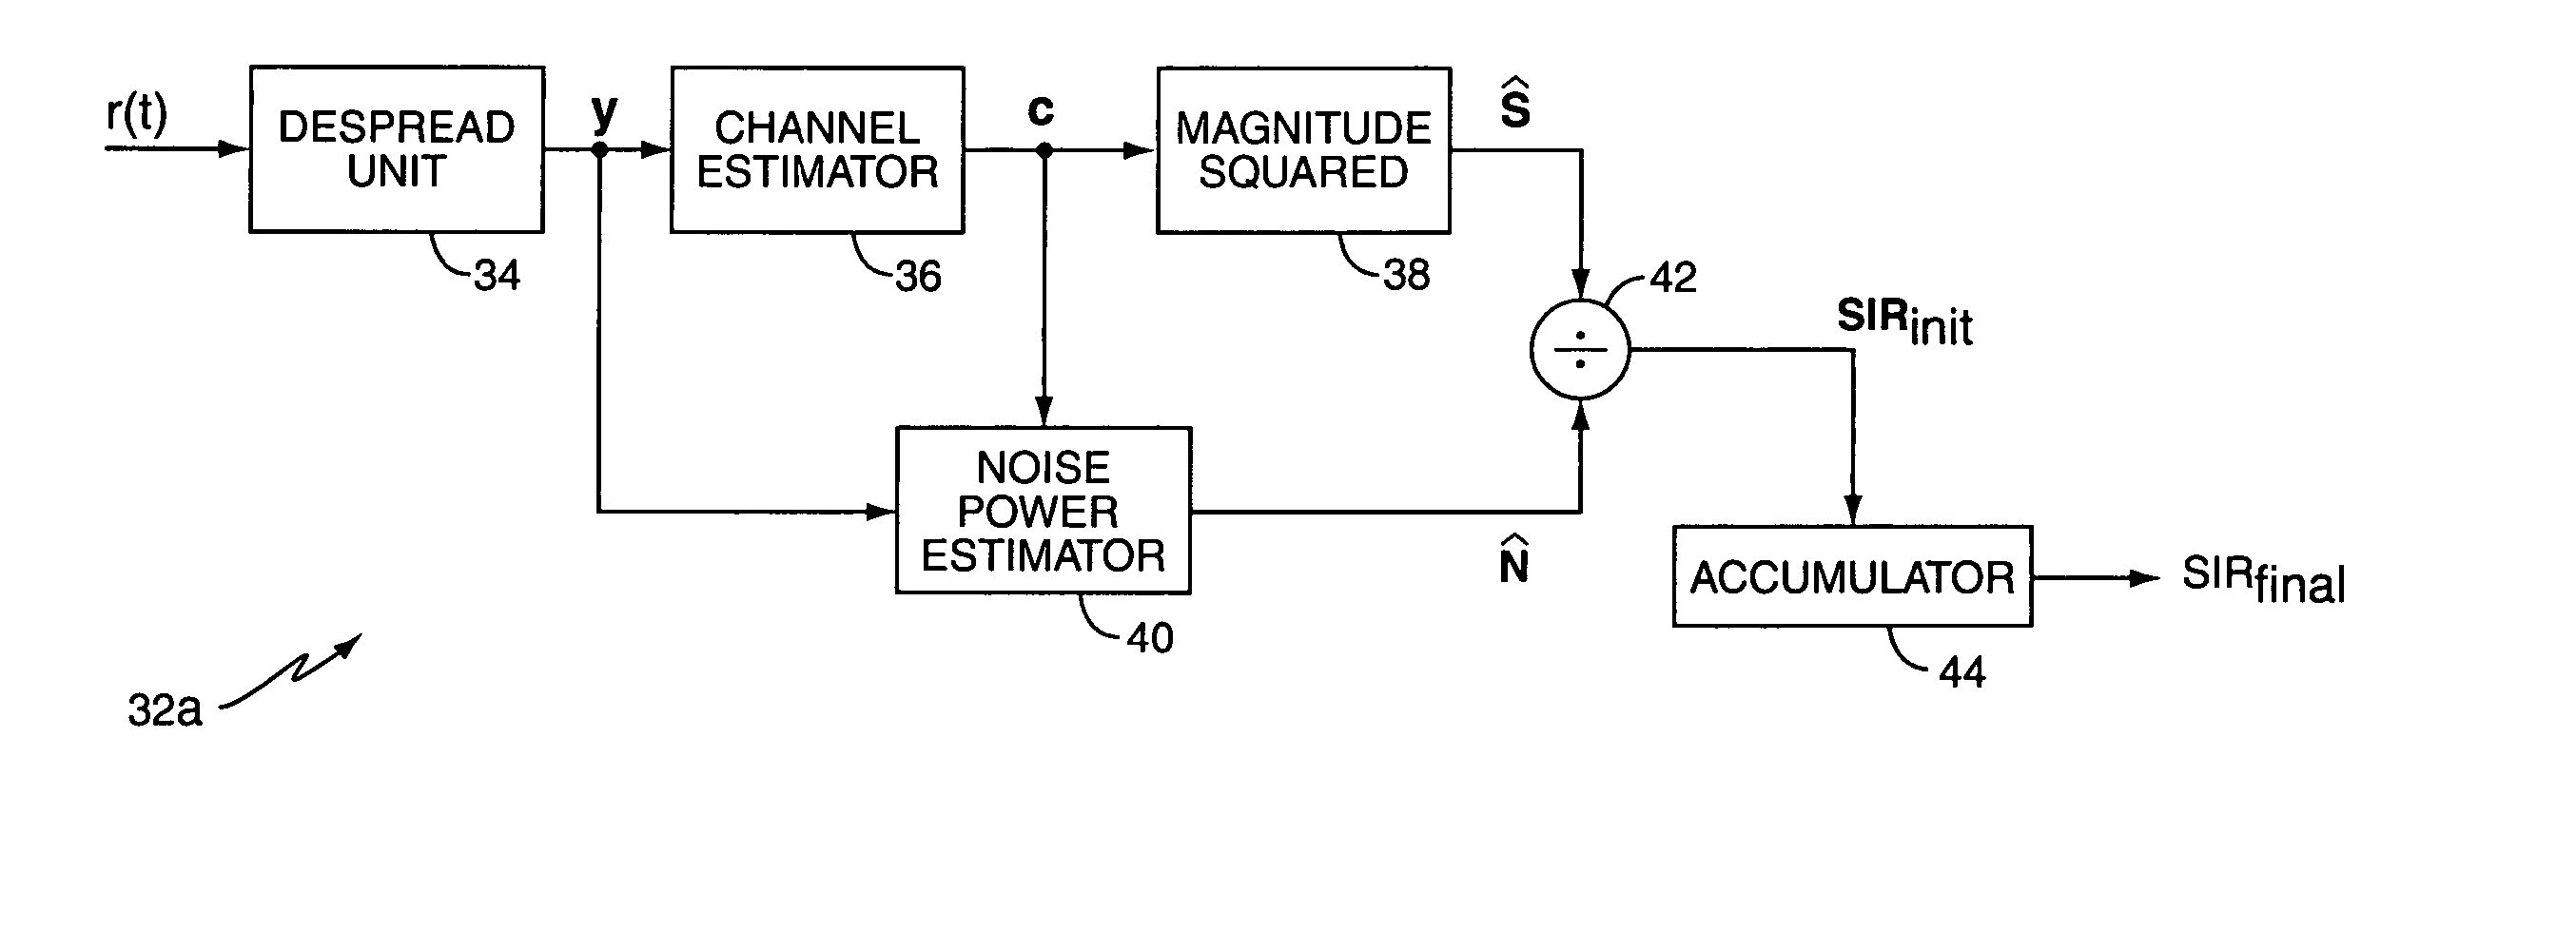 SIR estimation in a wireless receiver